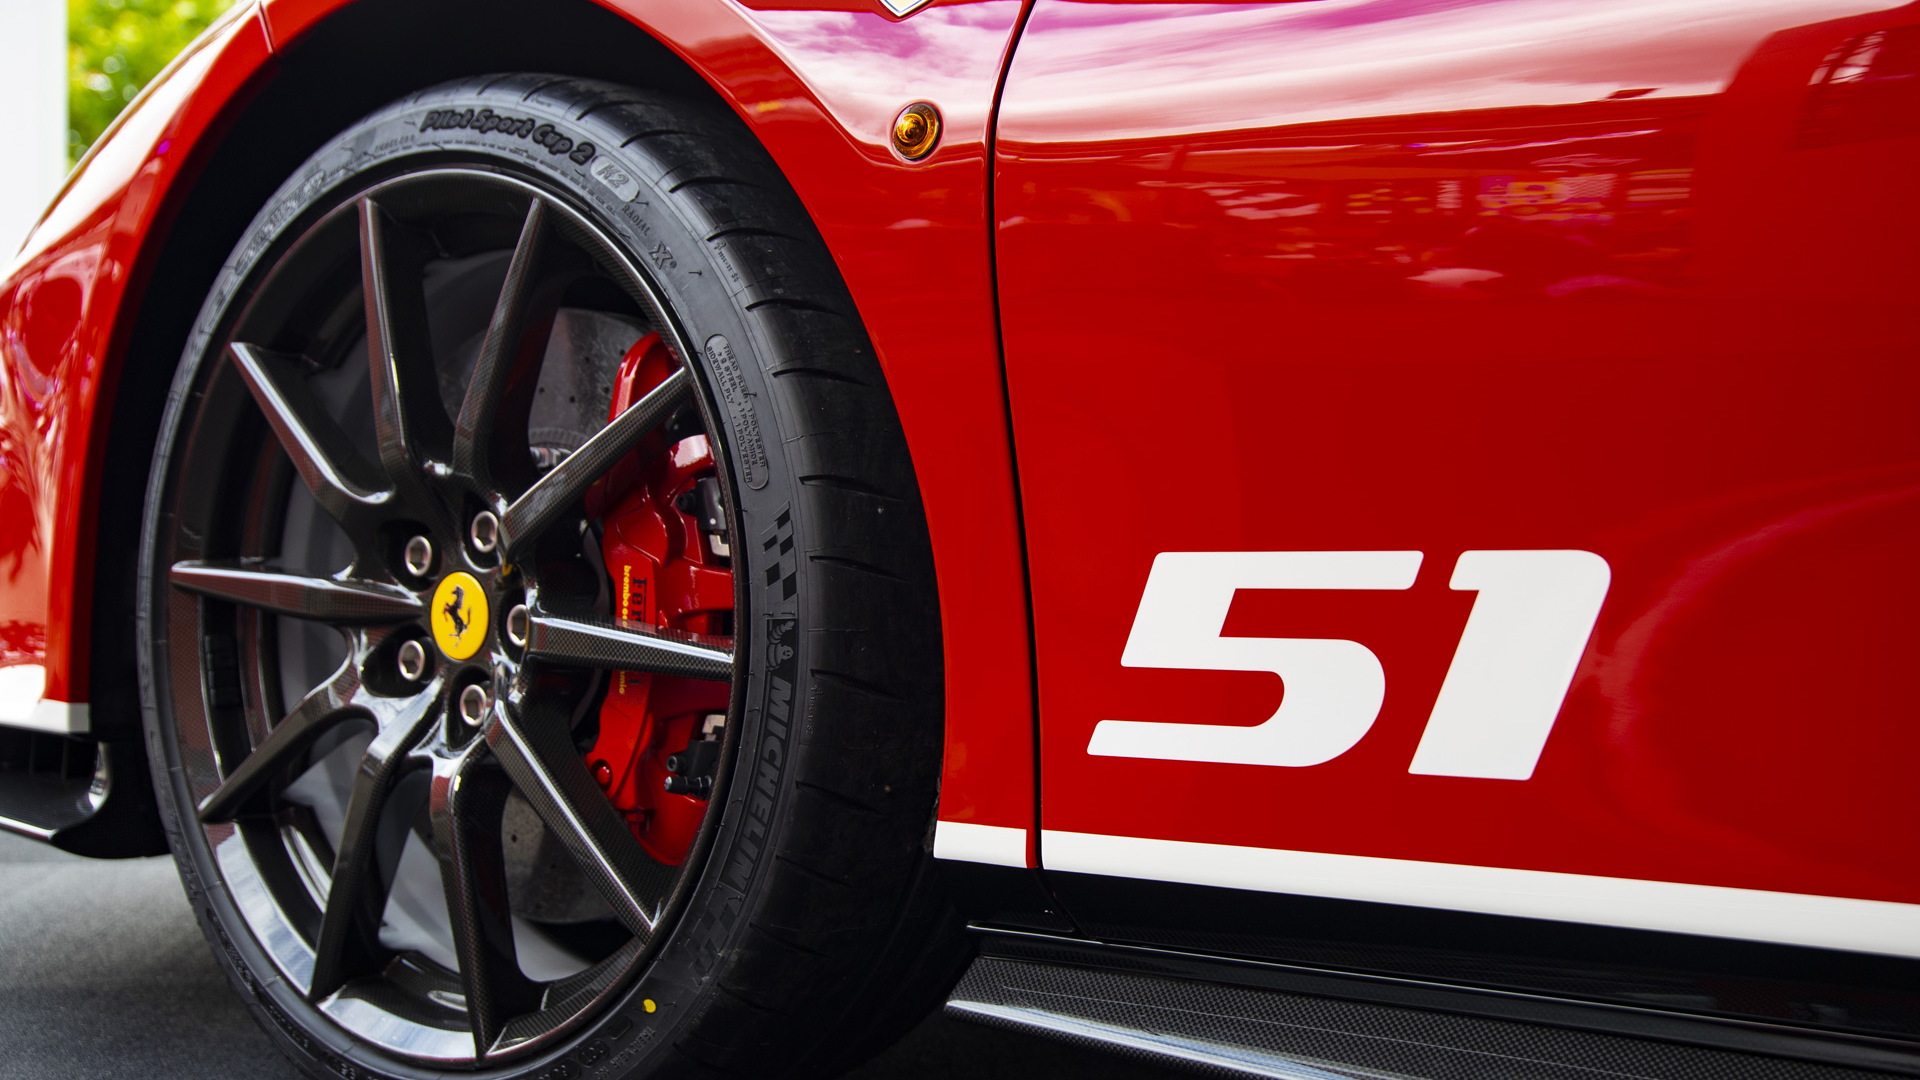 Ferrari 488 Pista fitted with carbon fiber wheels